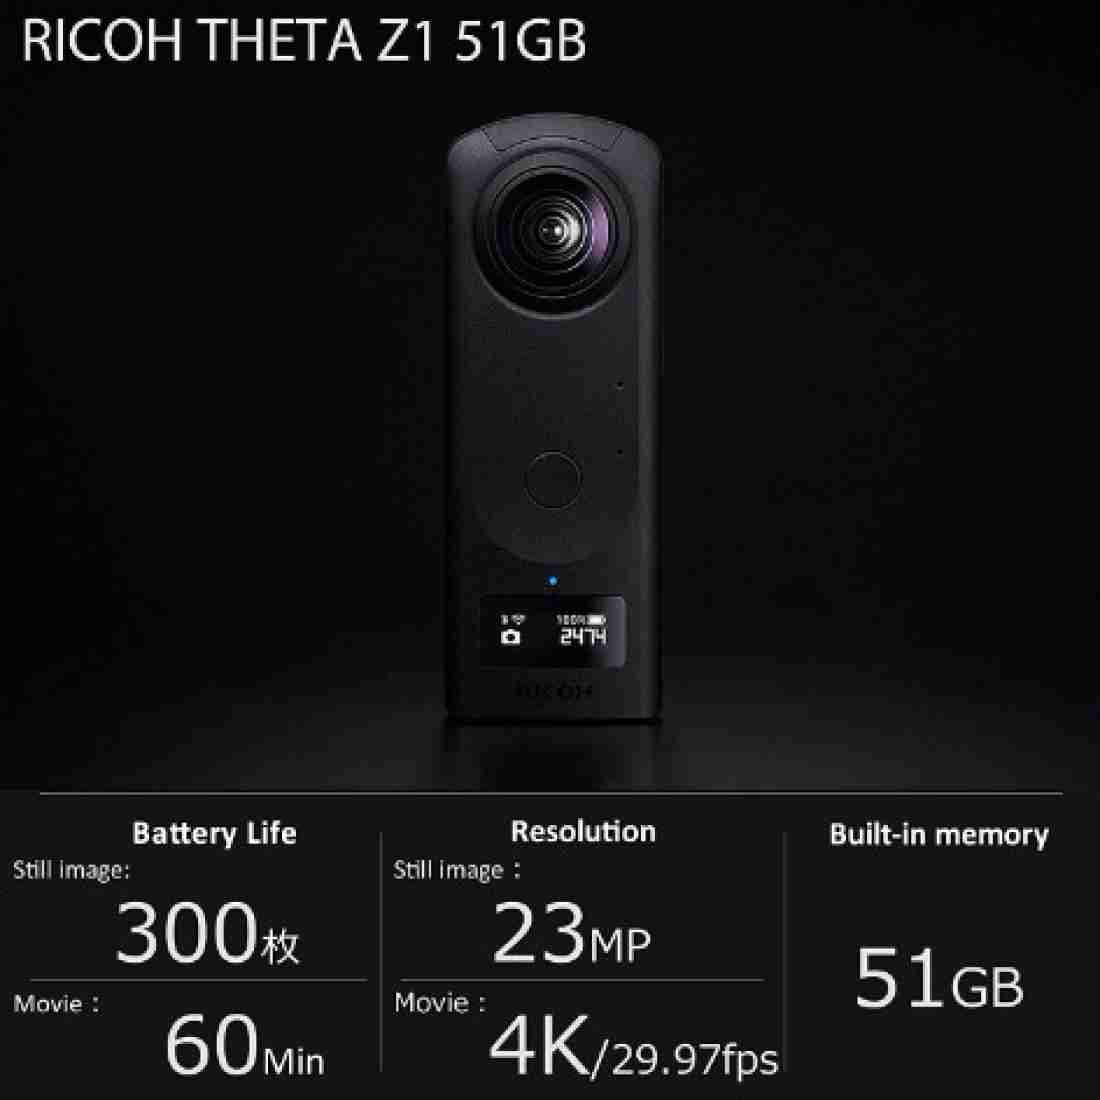 Ricoh Theta Z1 51GB Vs Insta360 One X2